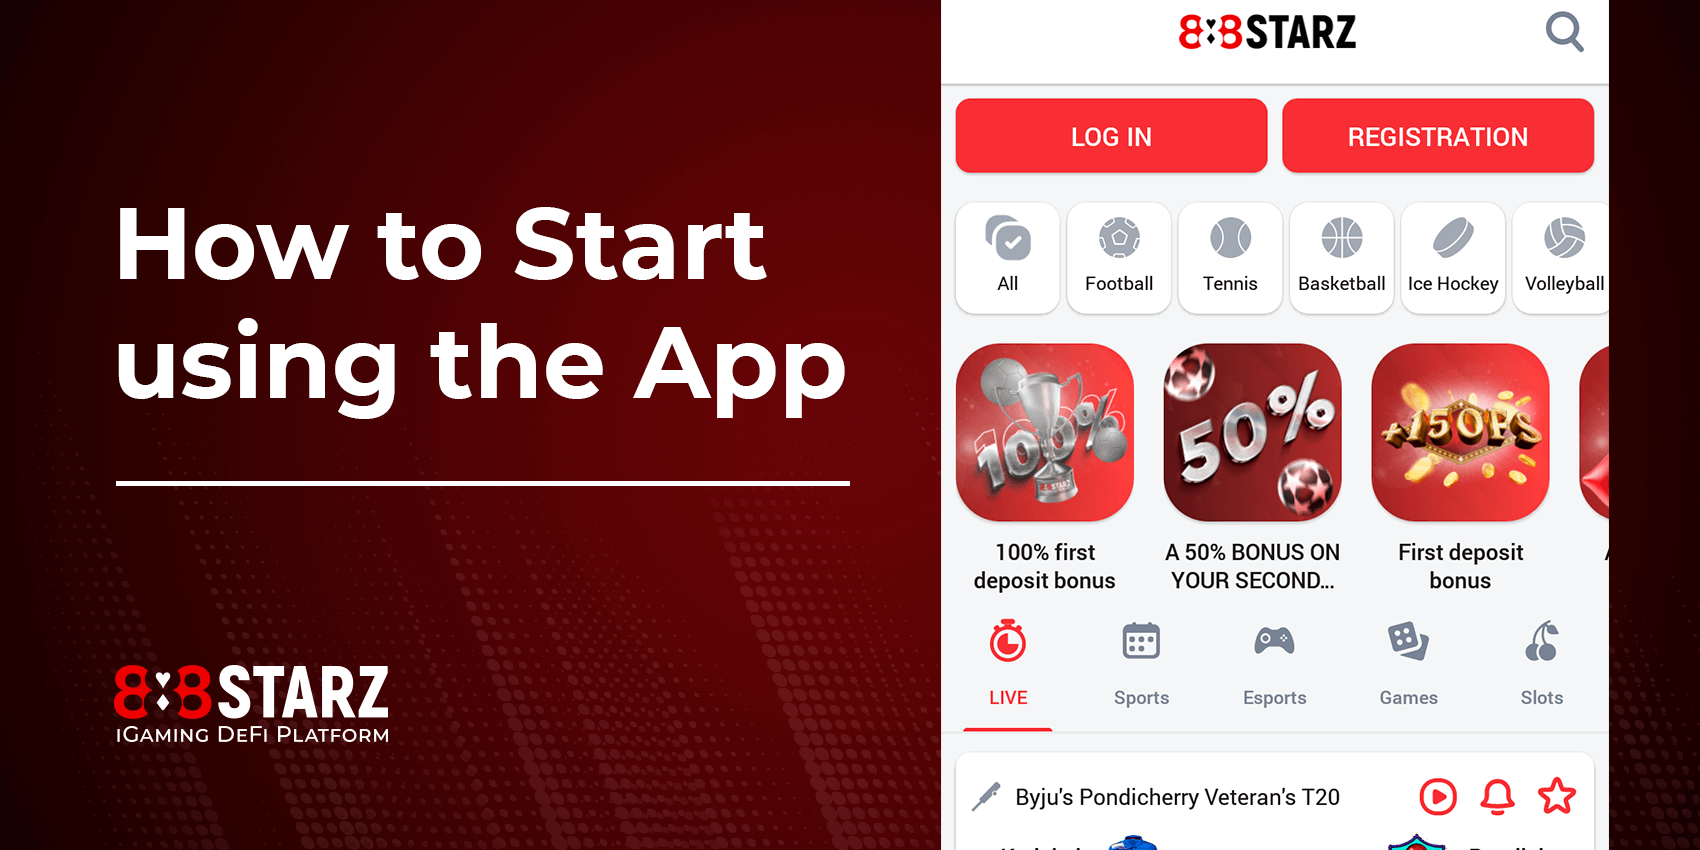 How to Start Using 888Starz App?